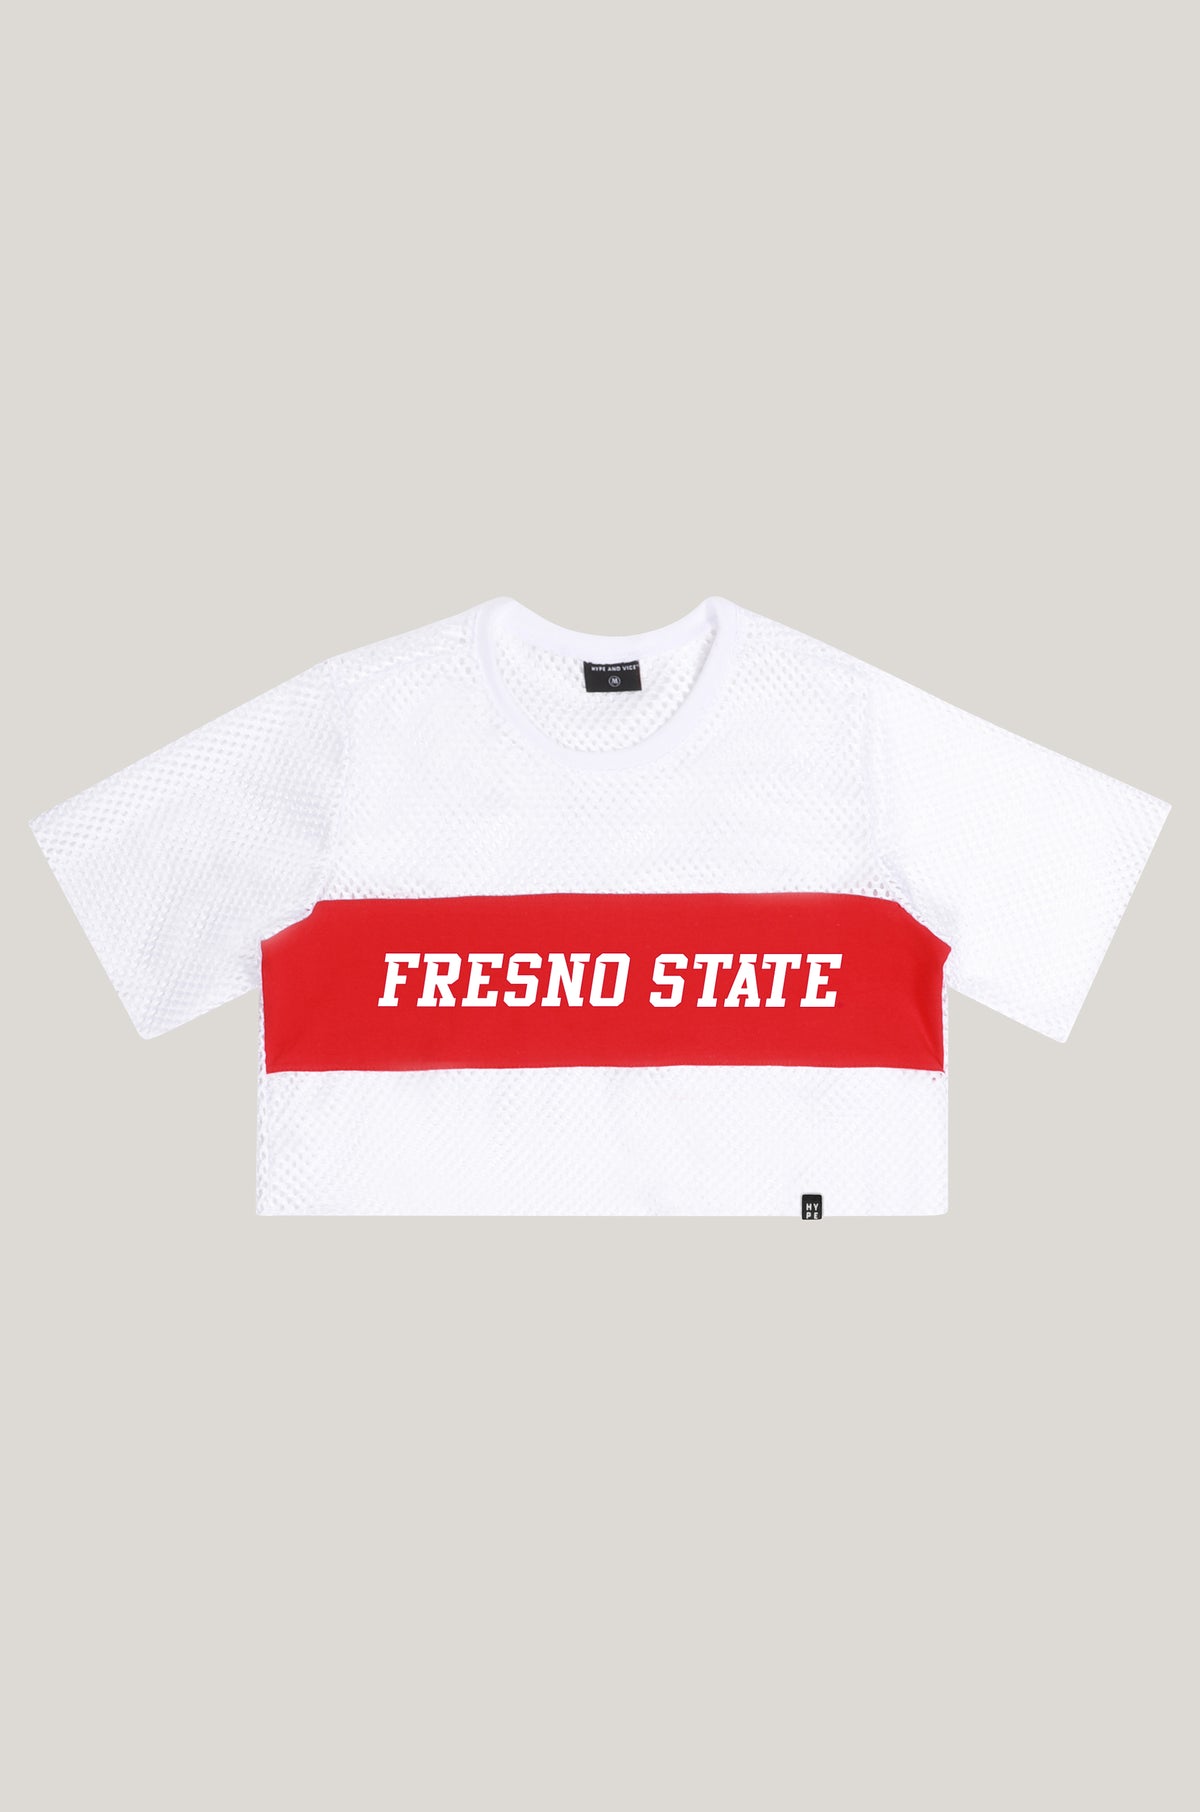 Fresno State Mesh Tee